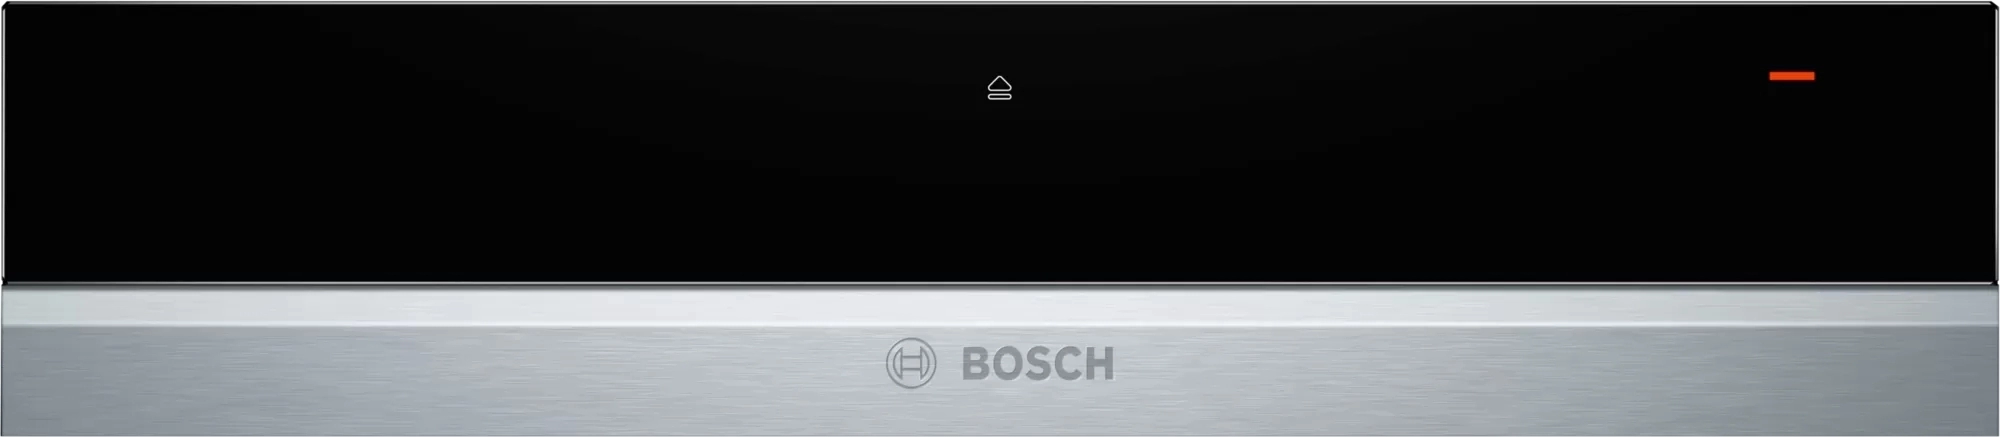 Incalzitor de farfurii si mincare Bosch BIC630NS1